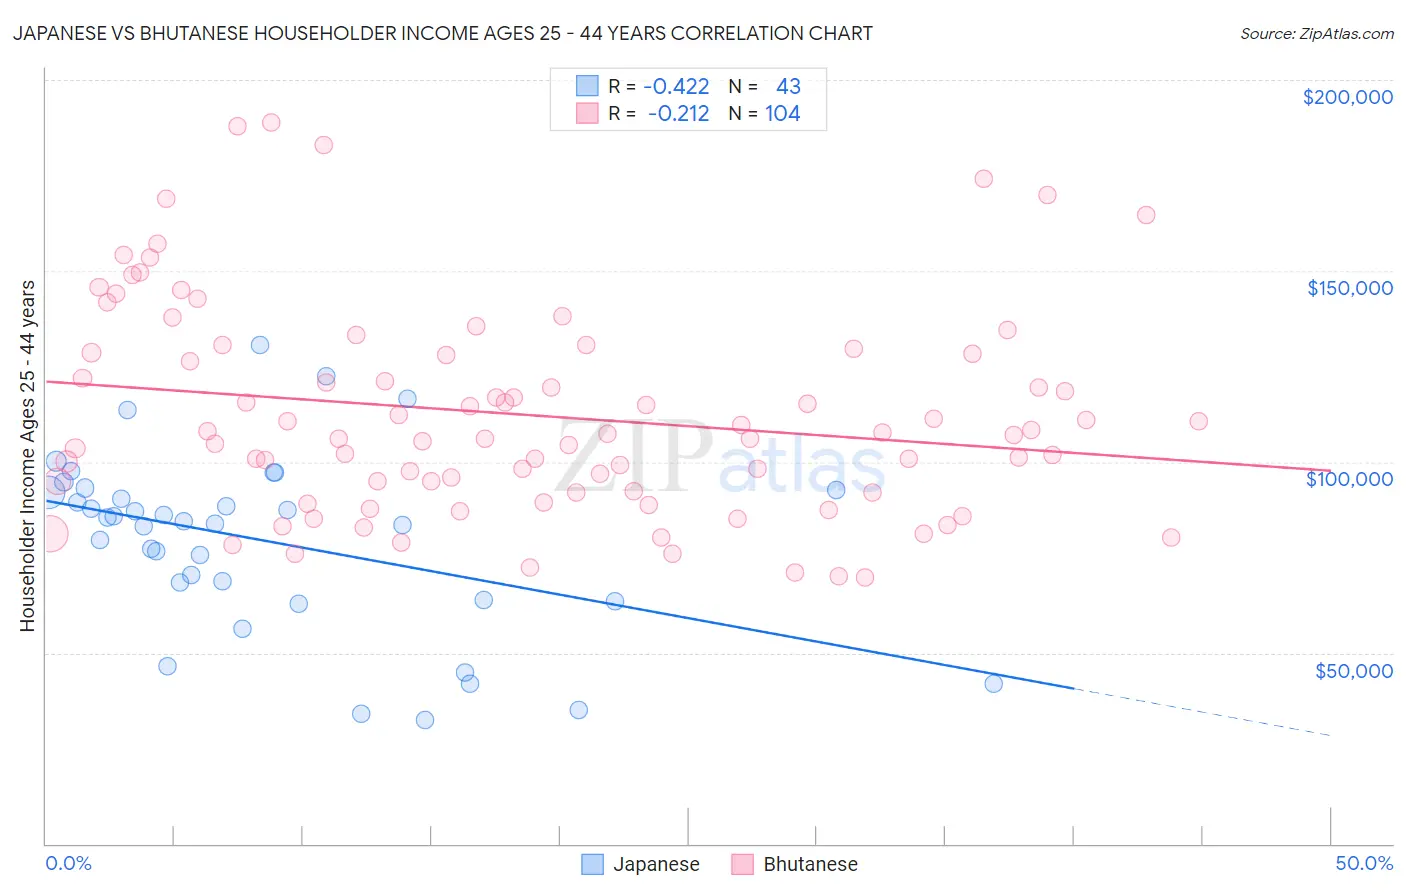 Japanese vs Bhutanese Householder Income Ages 25 - 44 years